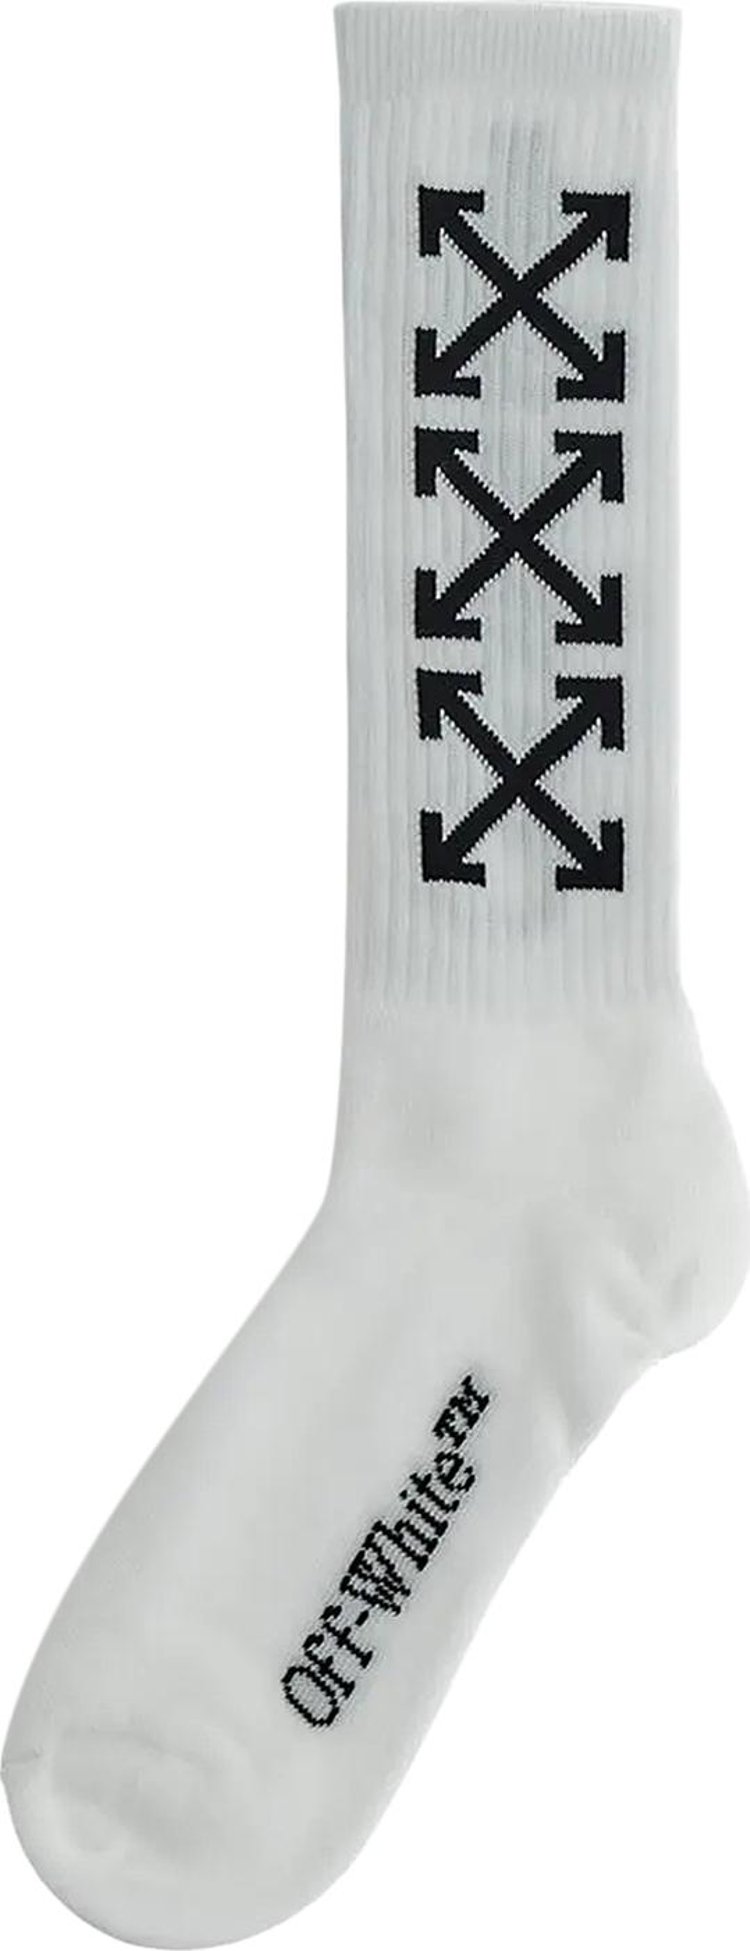 Buy Off-White Arrow Bookish Socks 'White/Black' - OMRA075C99KNI0010110 ...